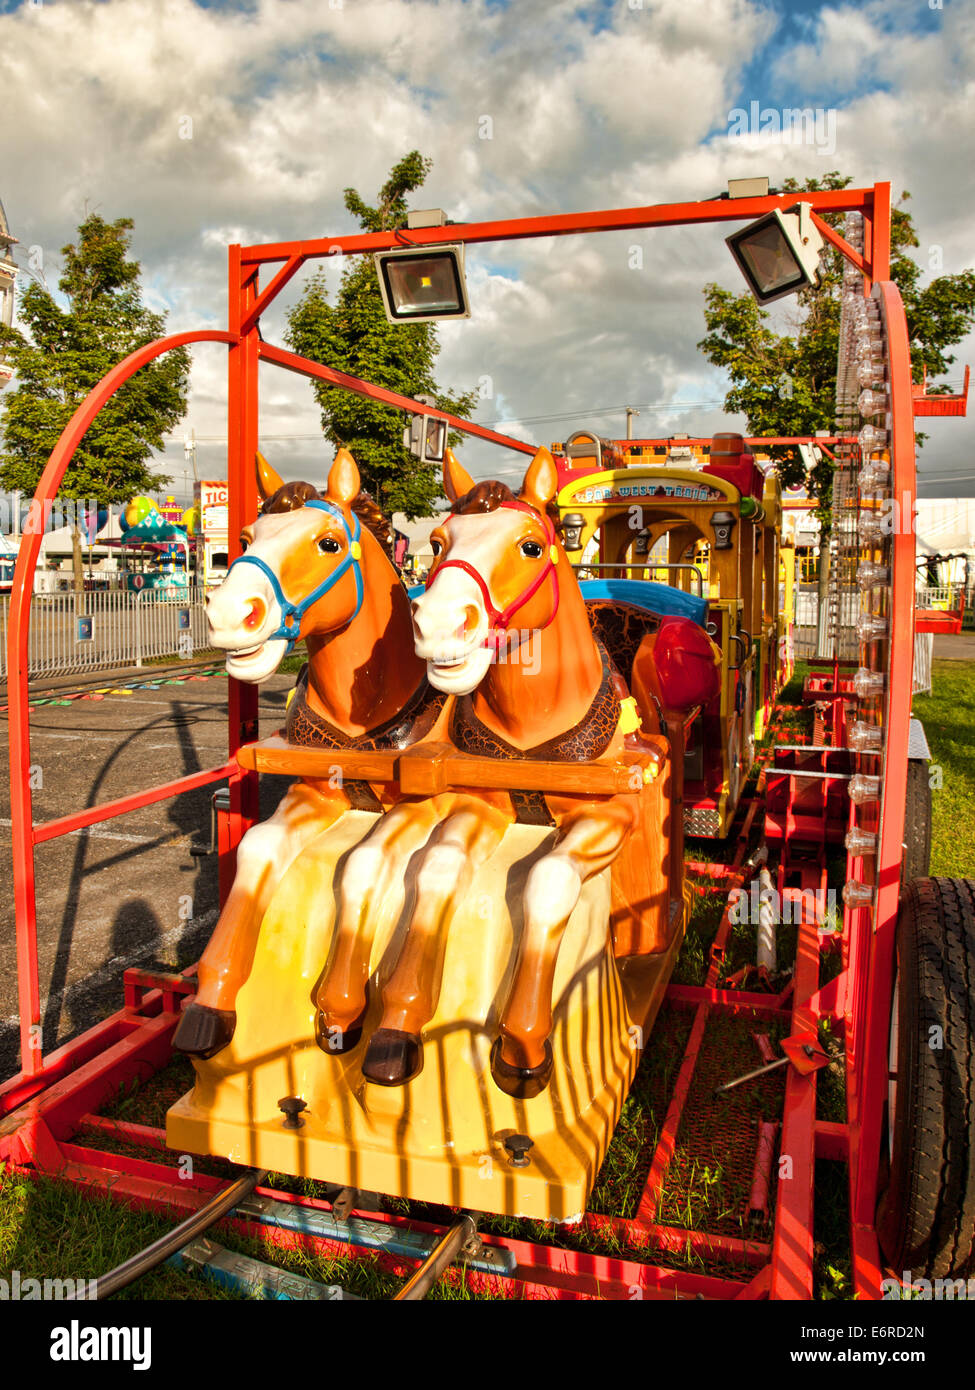 horse ride at a fair Stock Photo